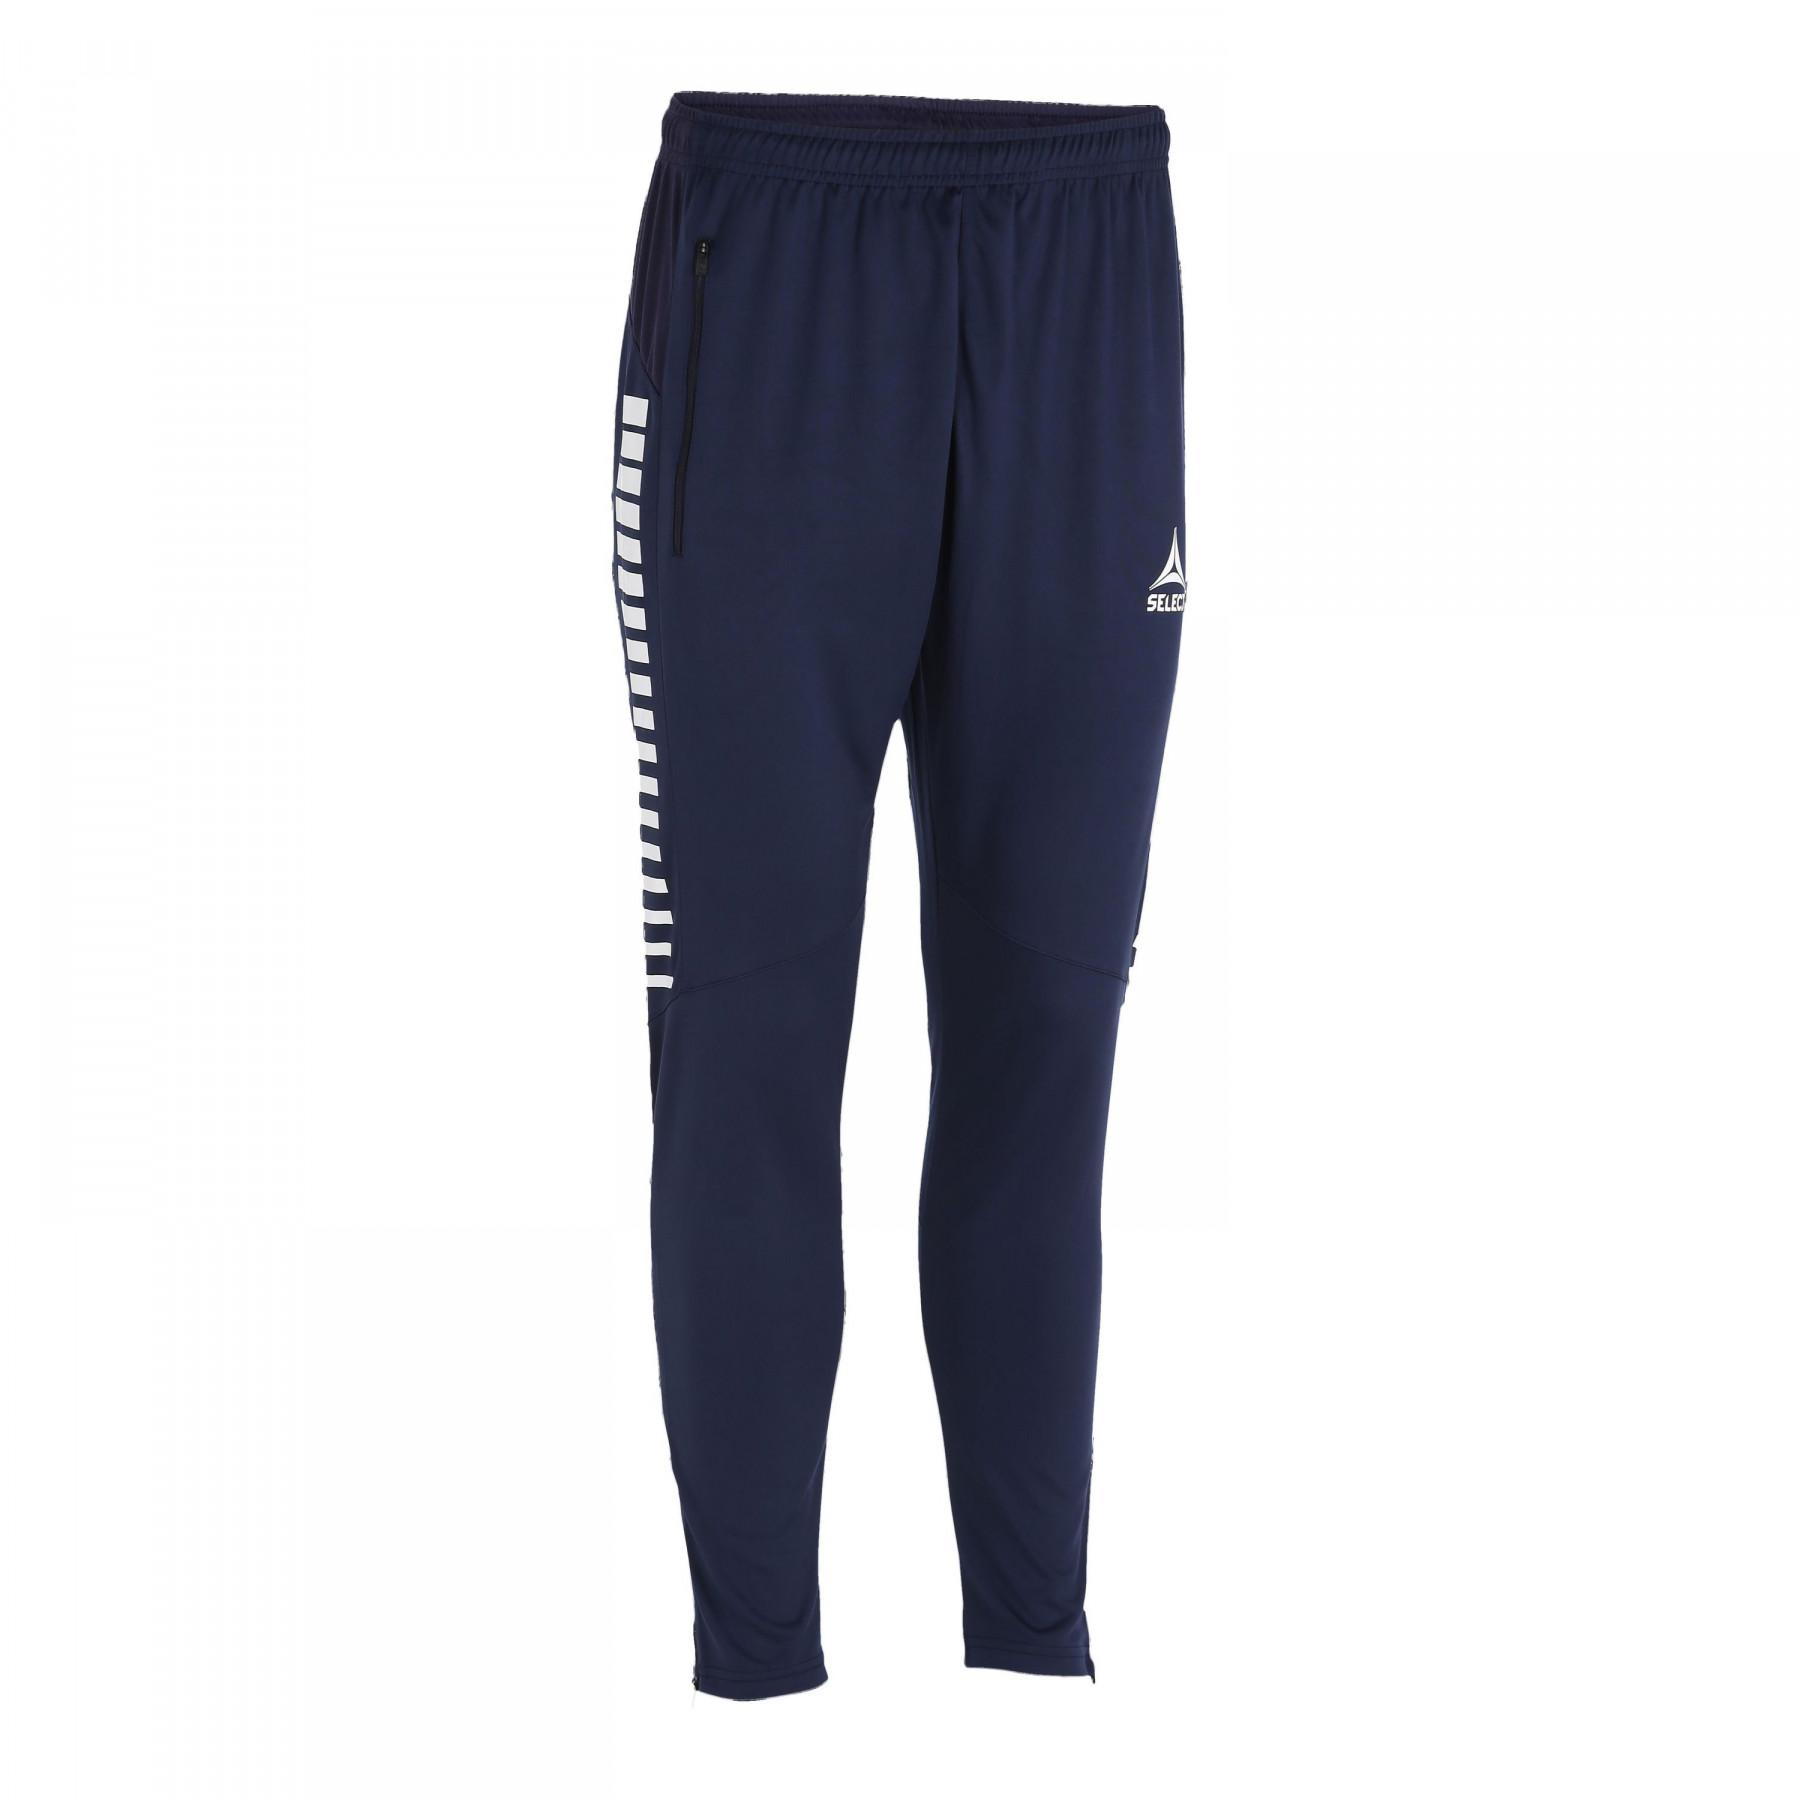 Romantiek Correctie zoom Pants Select Argentina Training - Textile - Handball wear